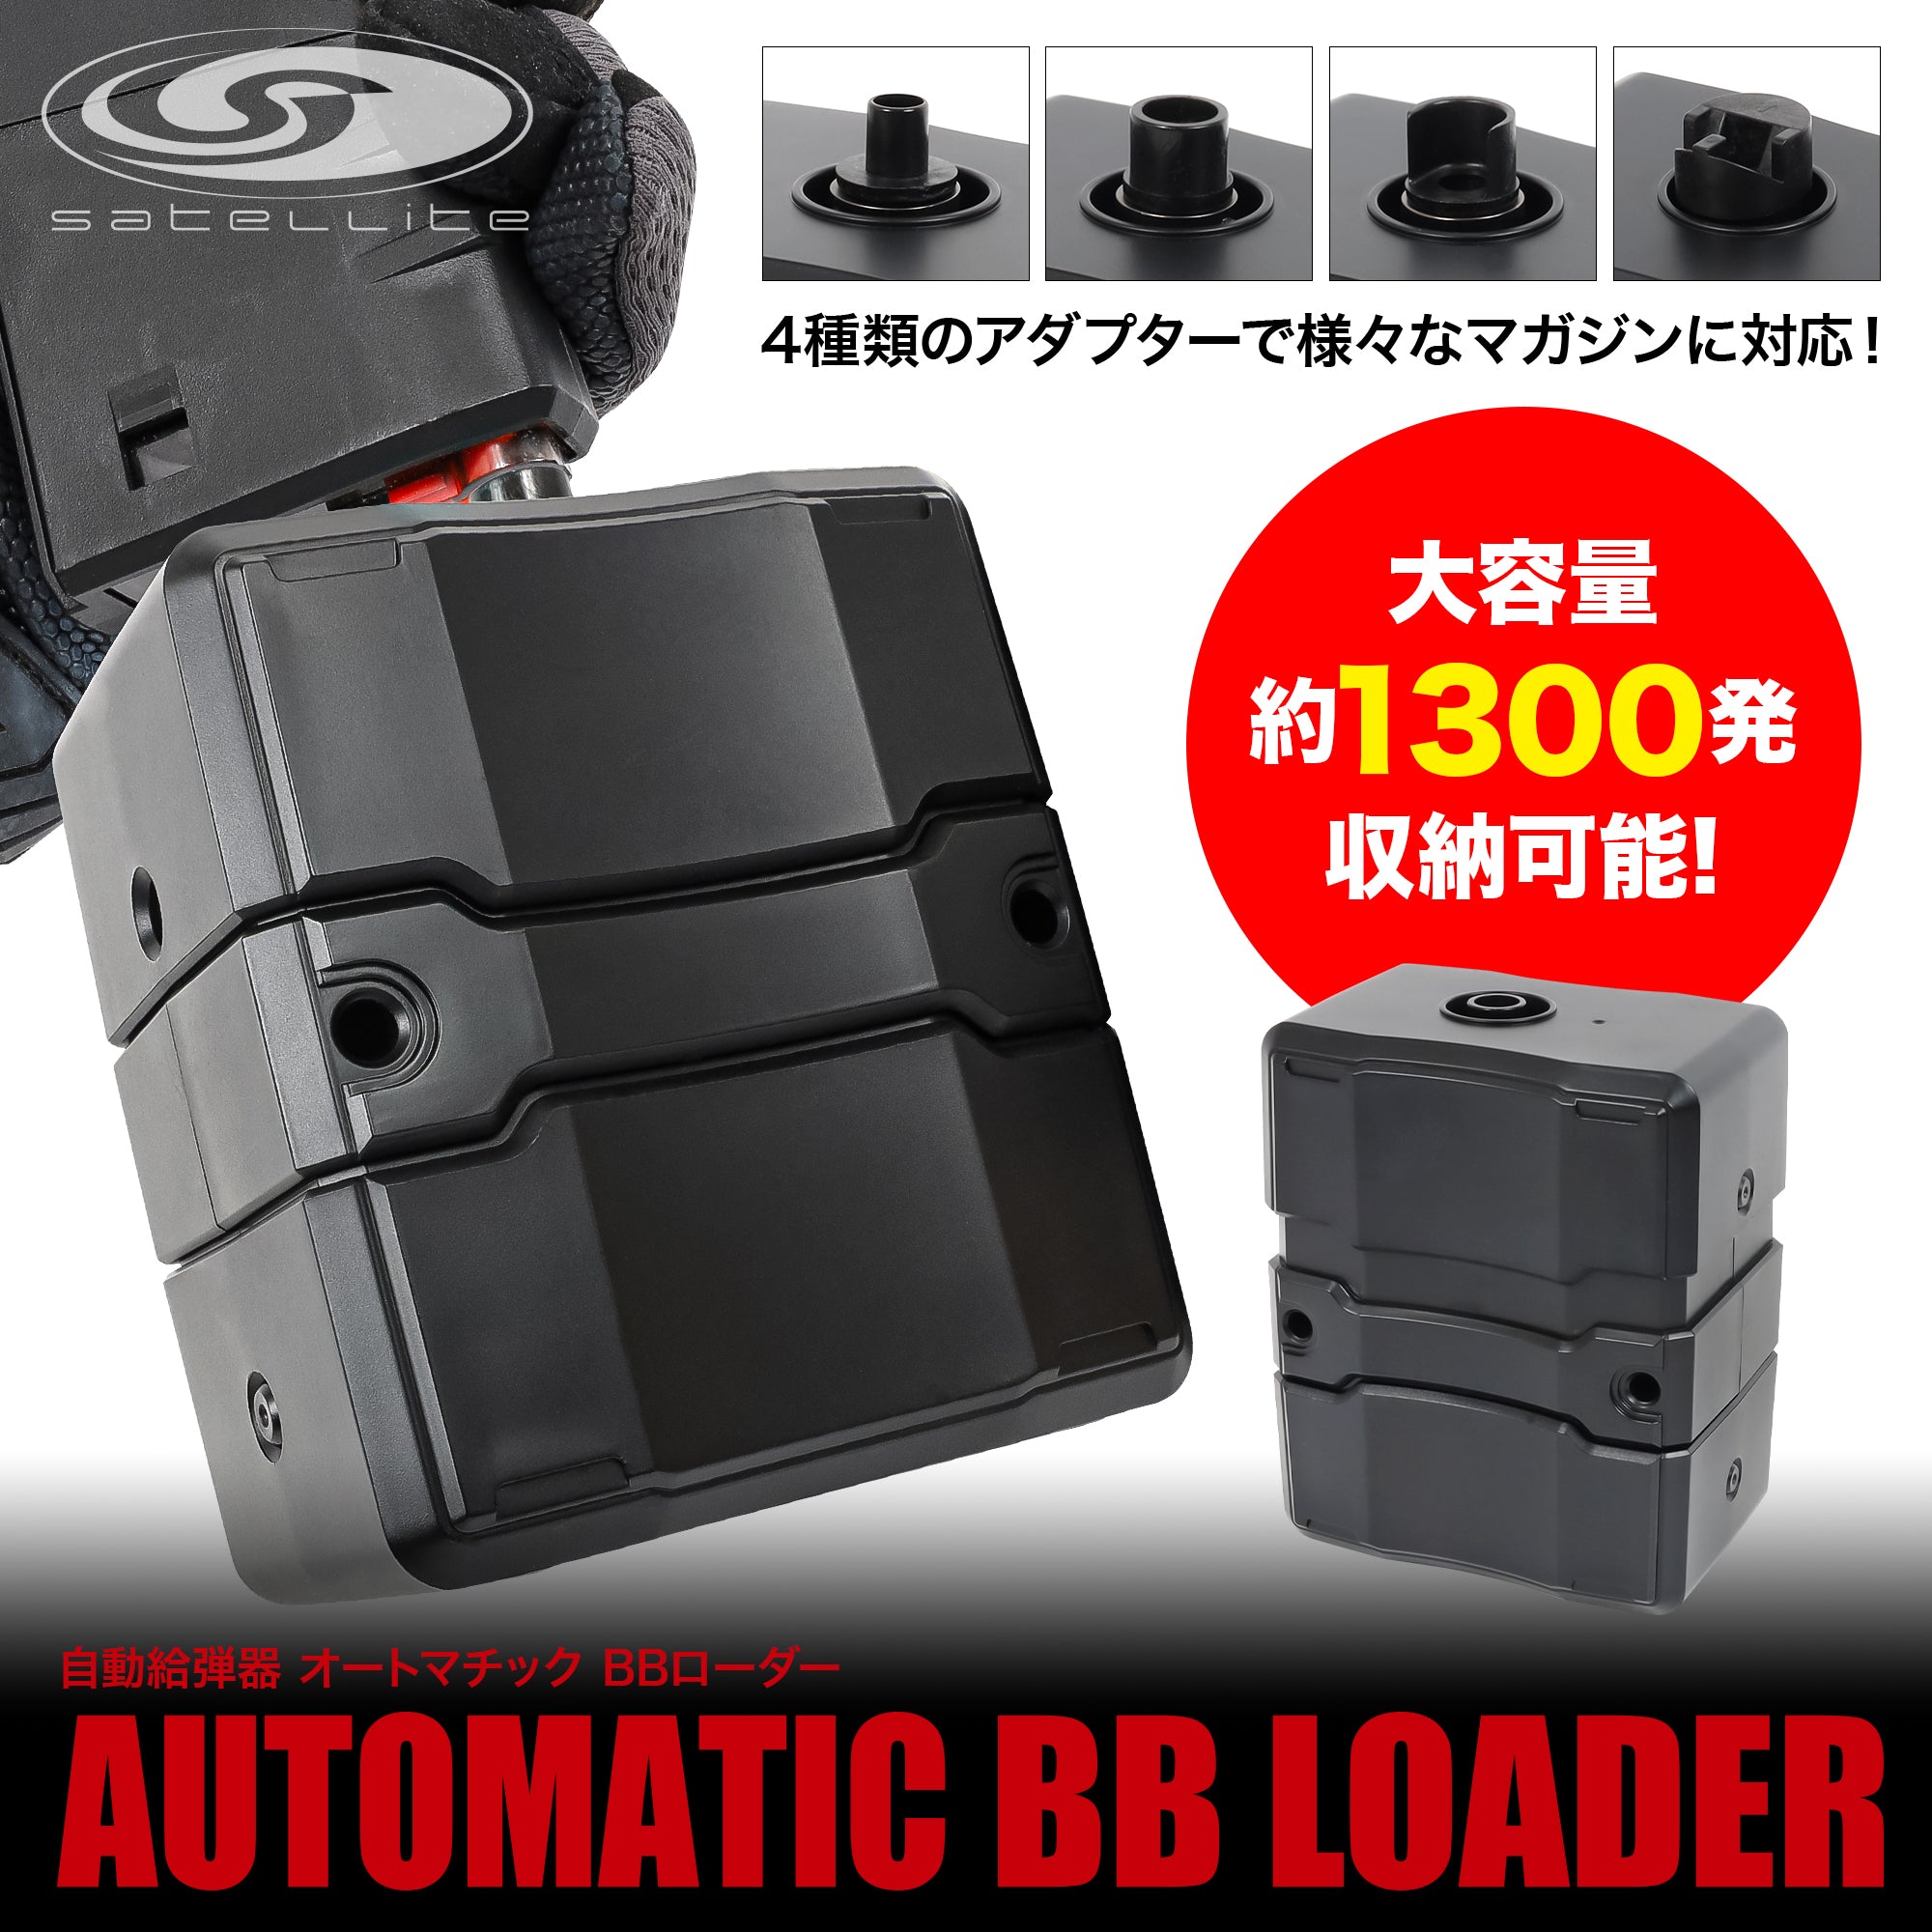 Automatic BB Loader [satellite]